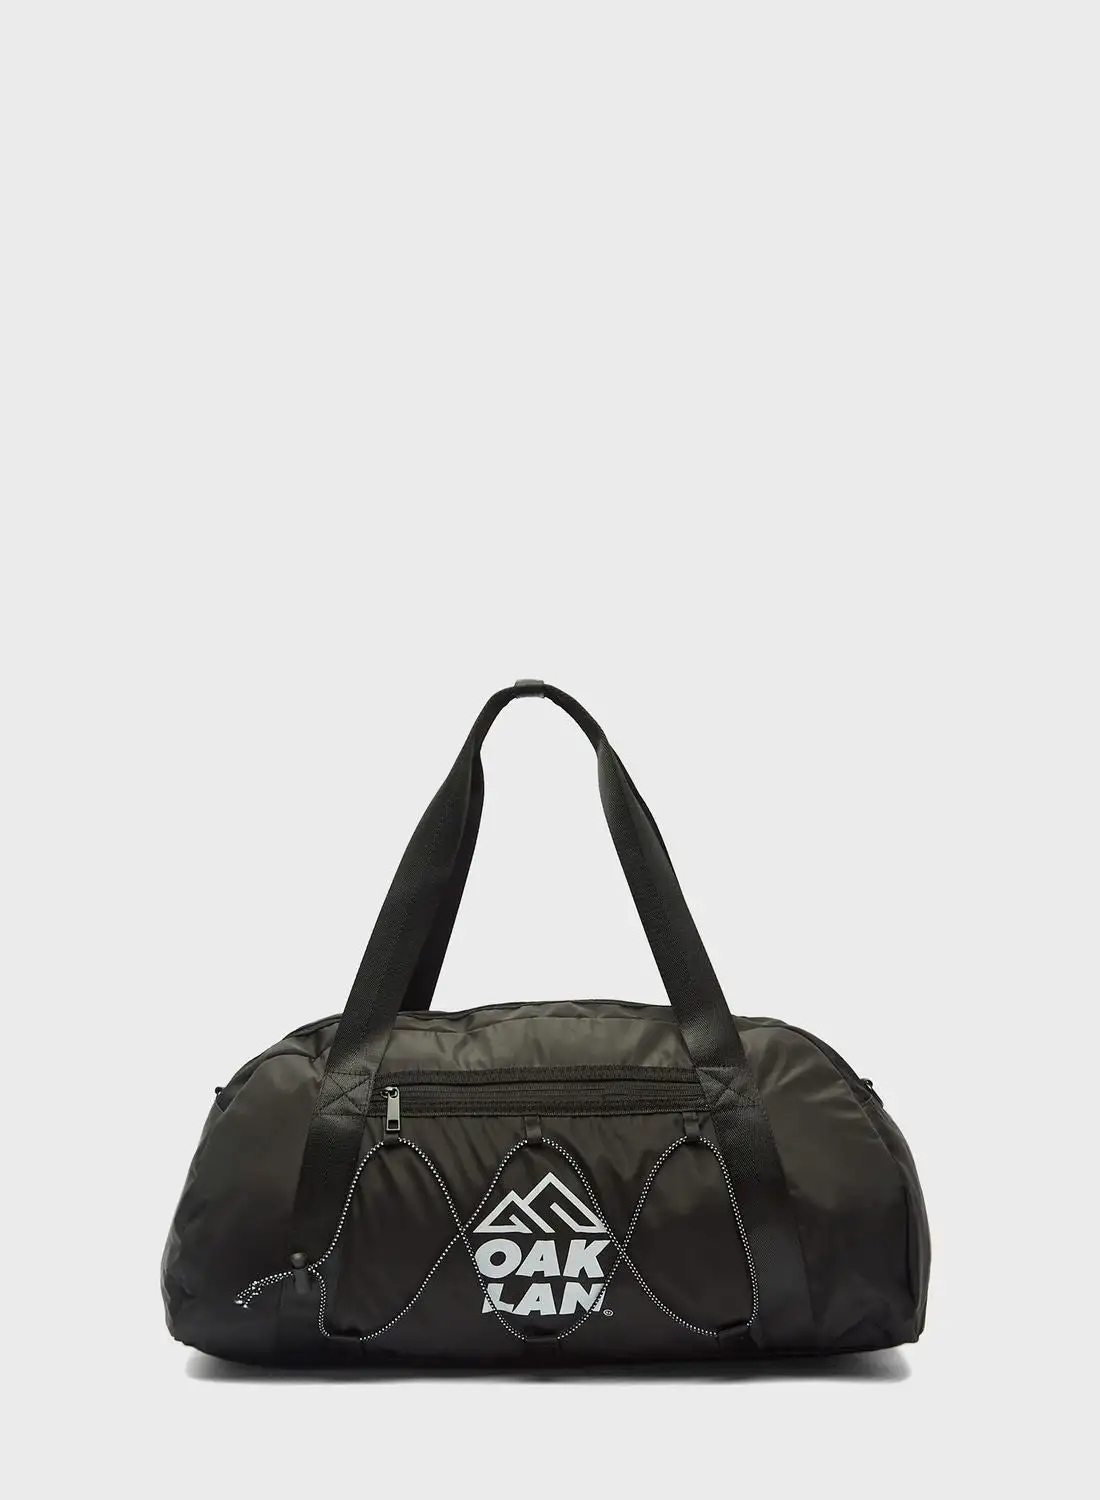 Oaklan by Shoexpress Logo Duffel Bag